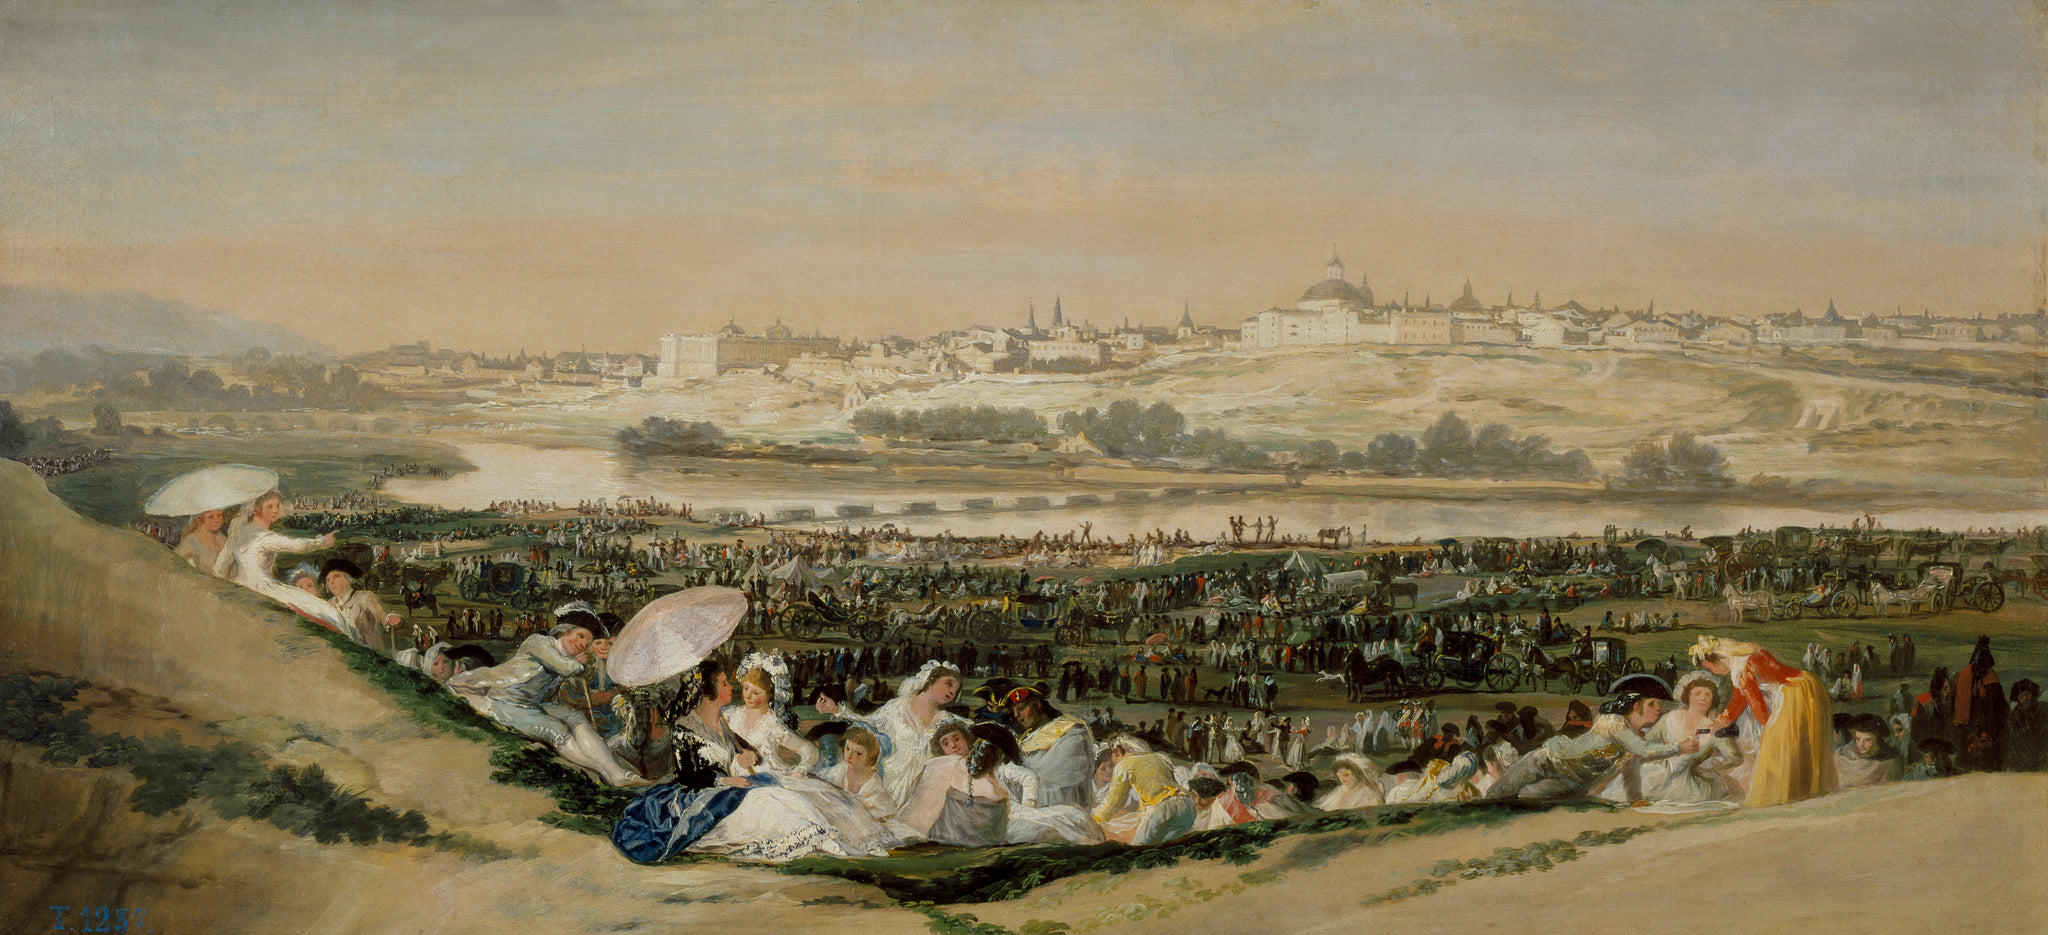 Le pré de San Isidro - Francisco de Goya